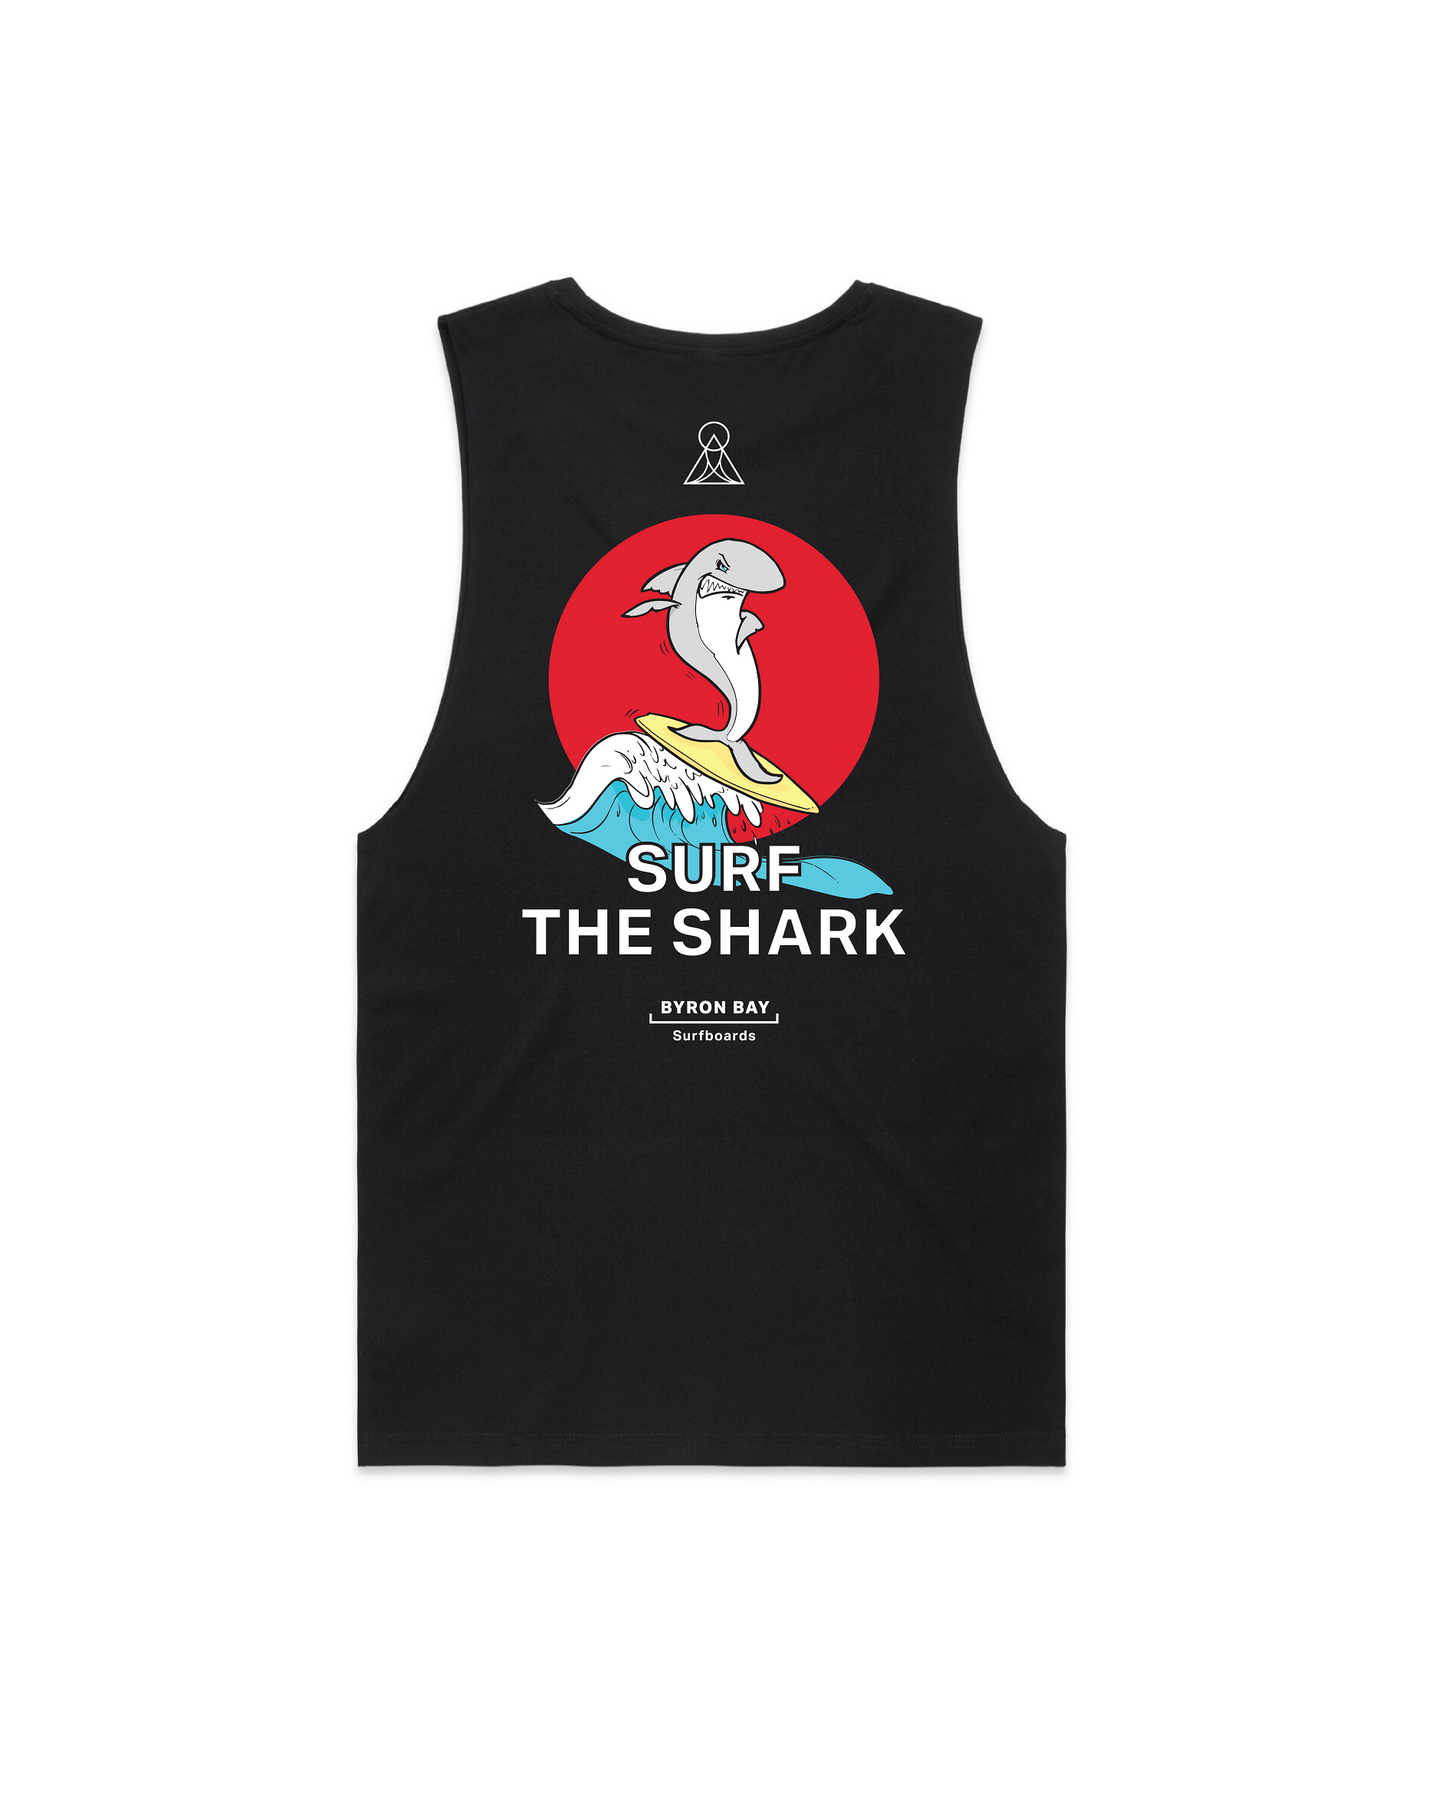 Surf The Shark Tank (Surf)